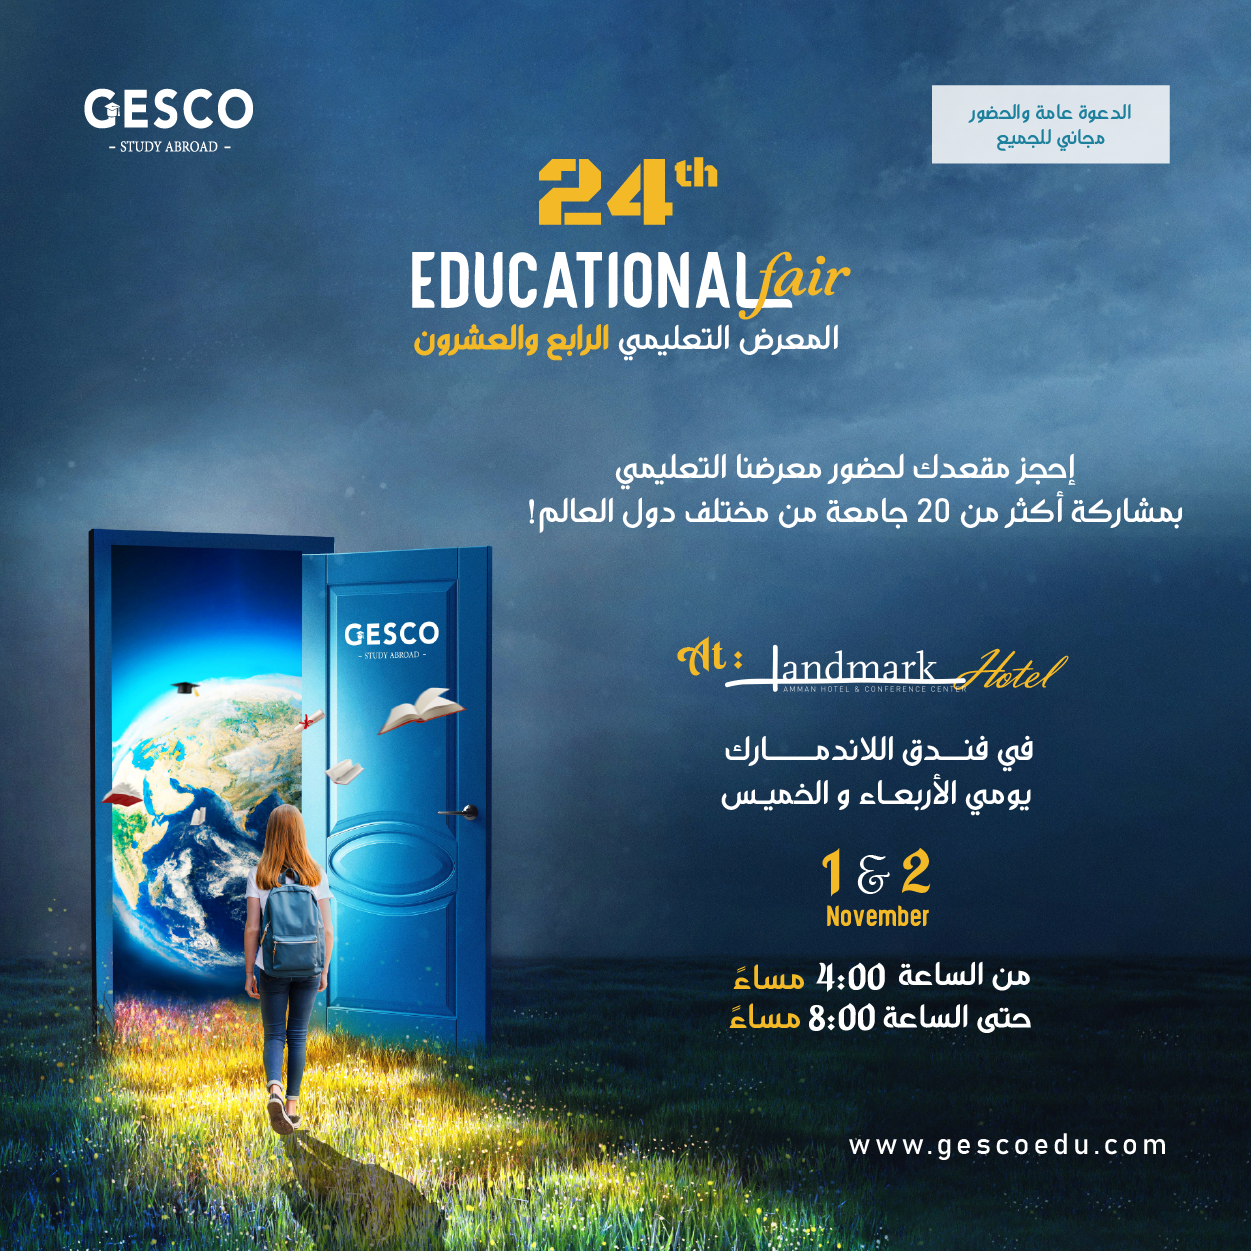 GESCO’s 24th Educational Fair!